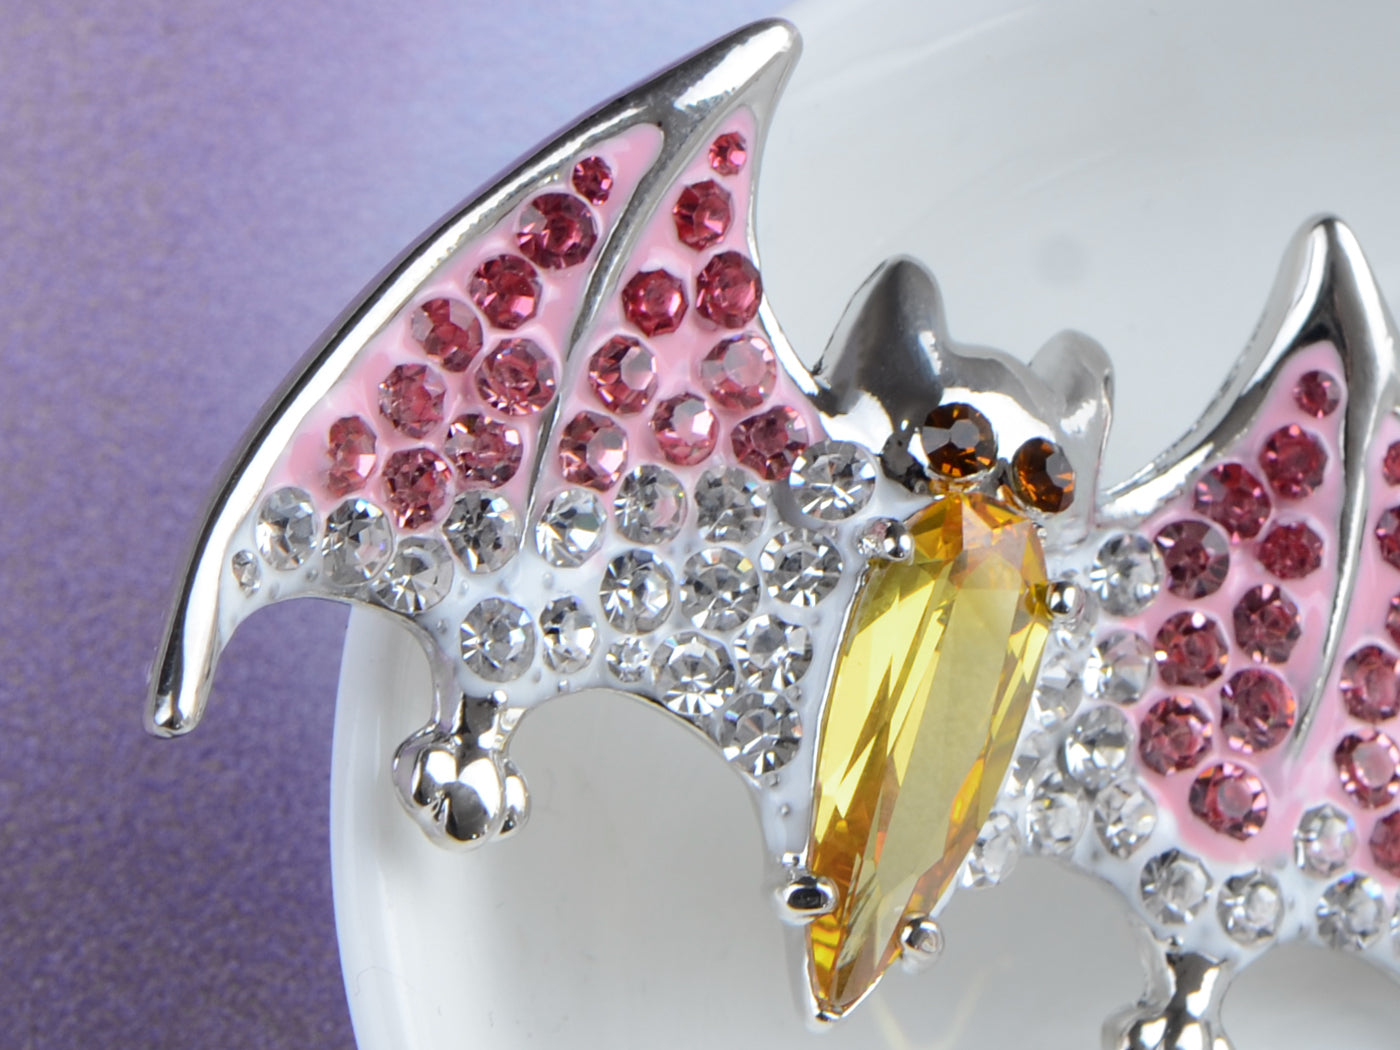 Silver Halloween Ombre Pink Vampire Bat Wing Animal Brooch Pin